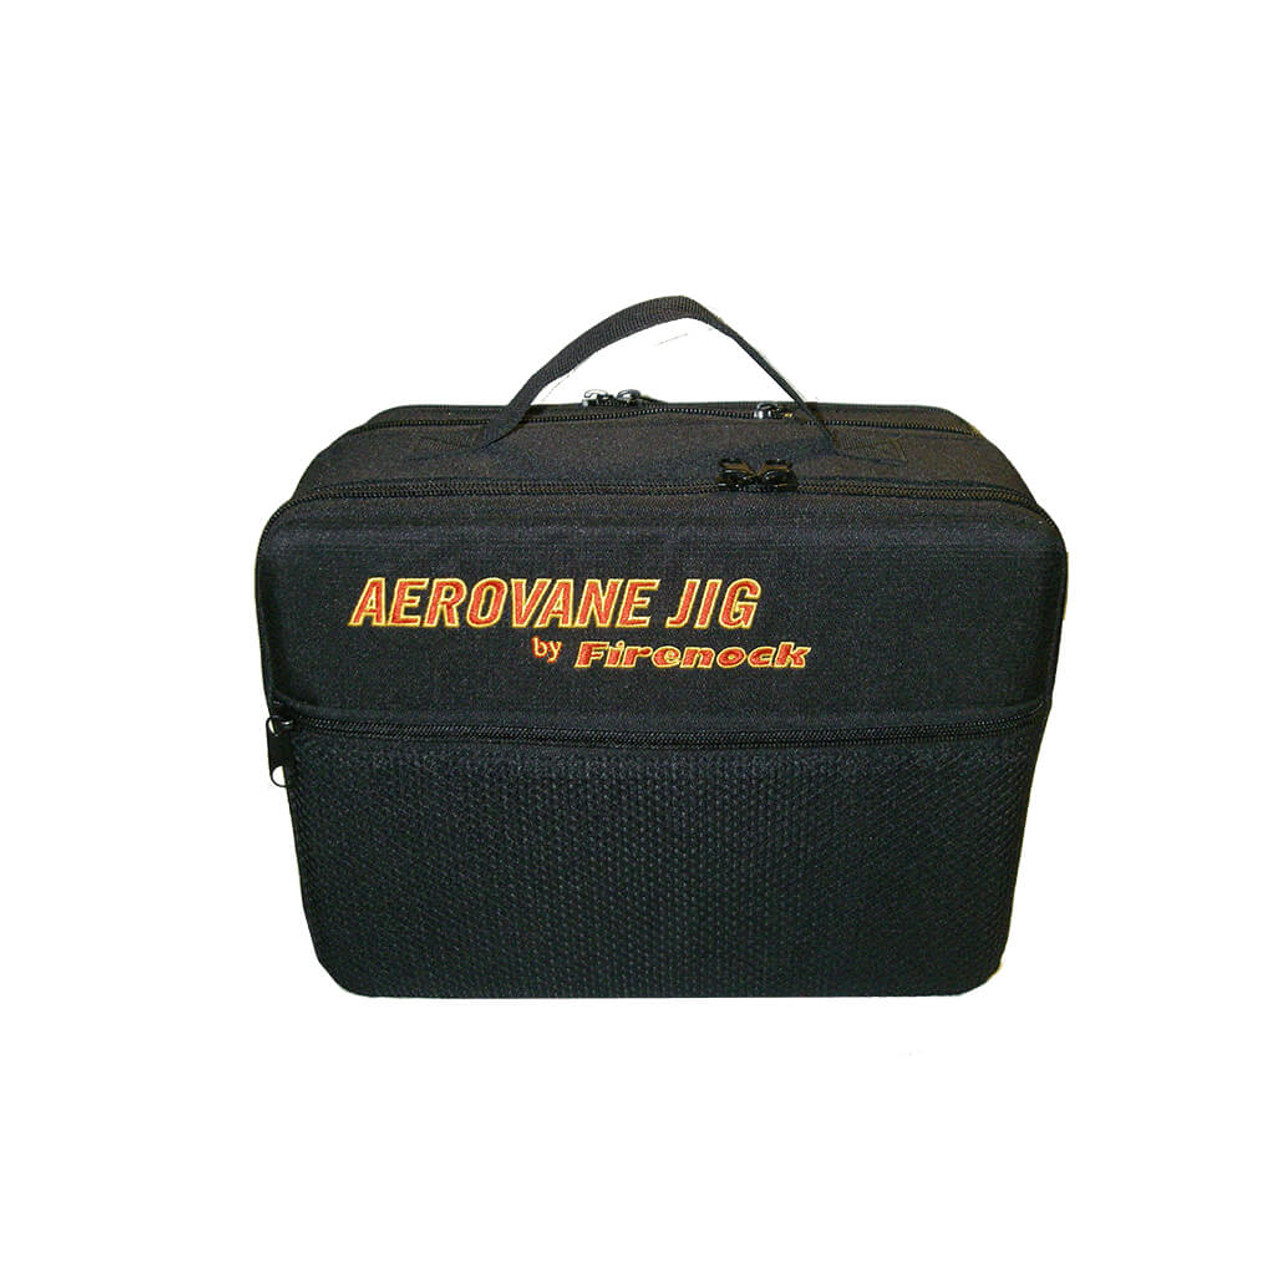 Aerovane Jig Deluxe Carrying Case